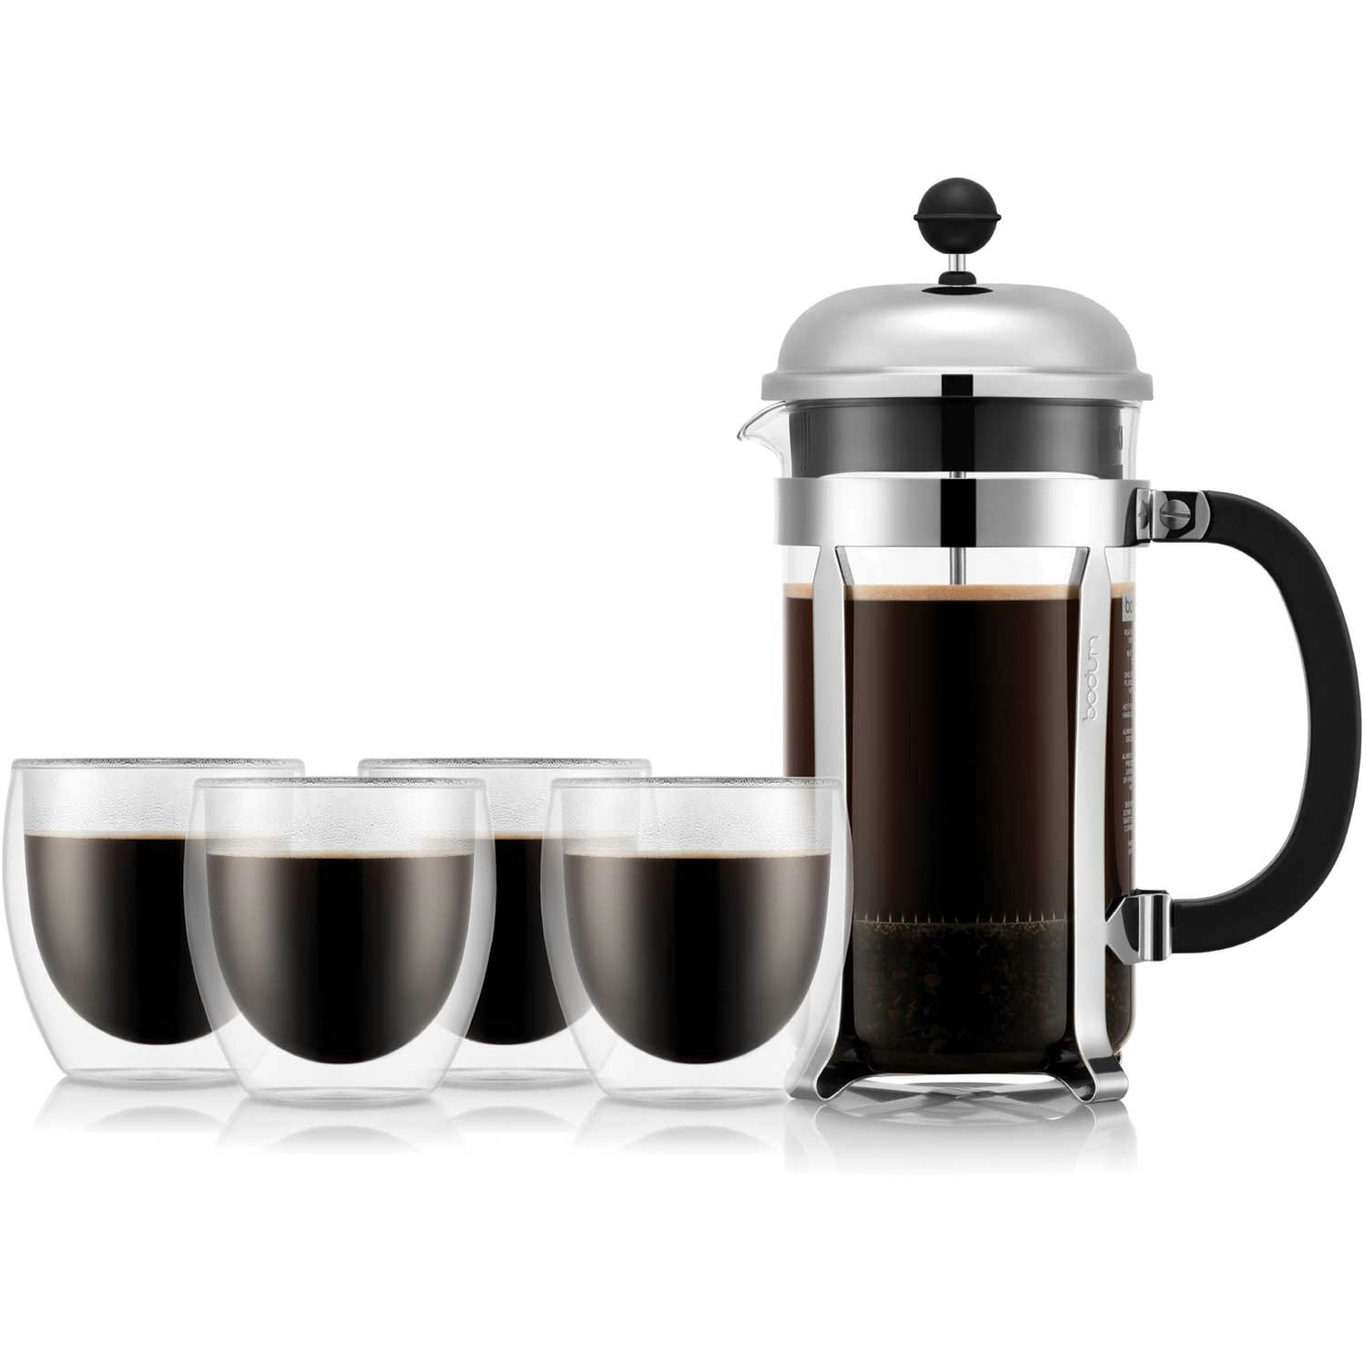 https://royaldesign.com/image/2/bodum-chambord-coffee-press-8-cups-24?w=800&quality=80